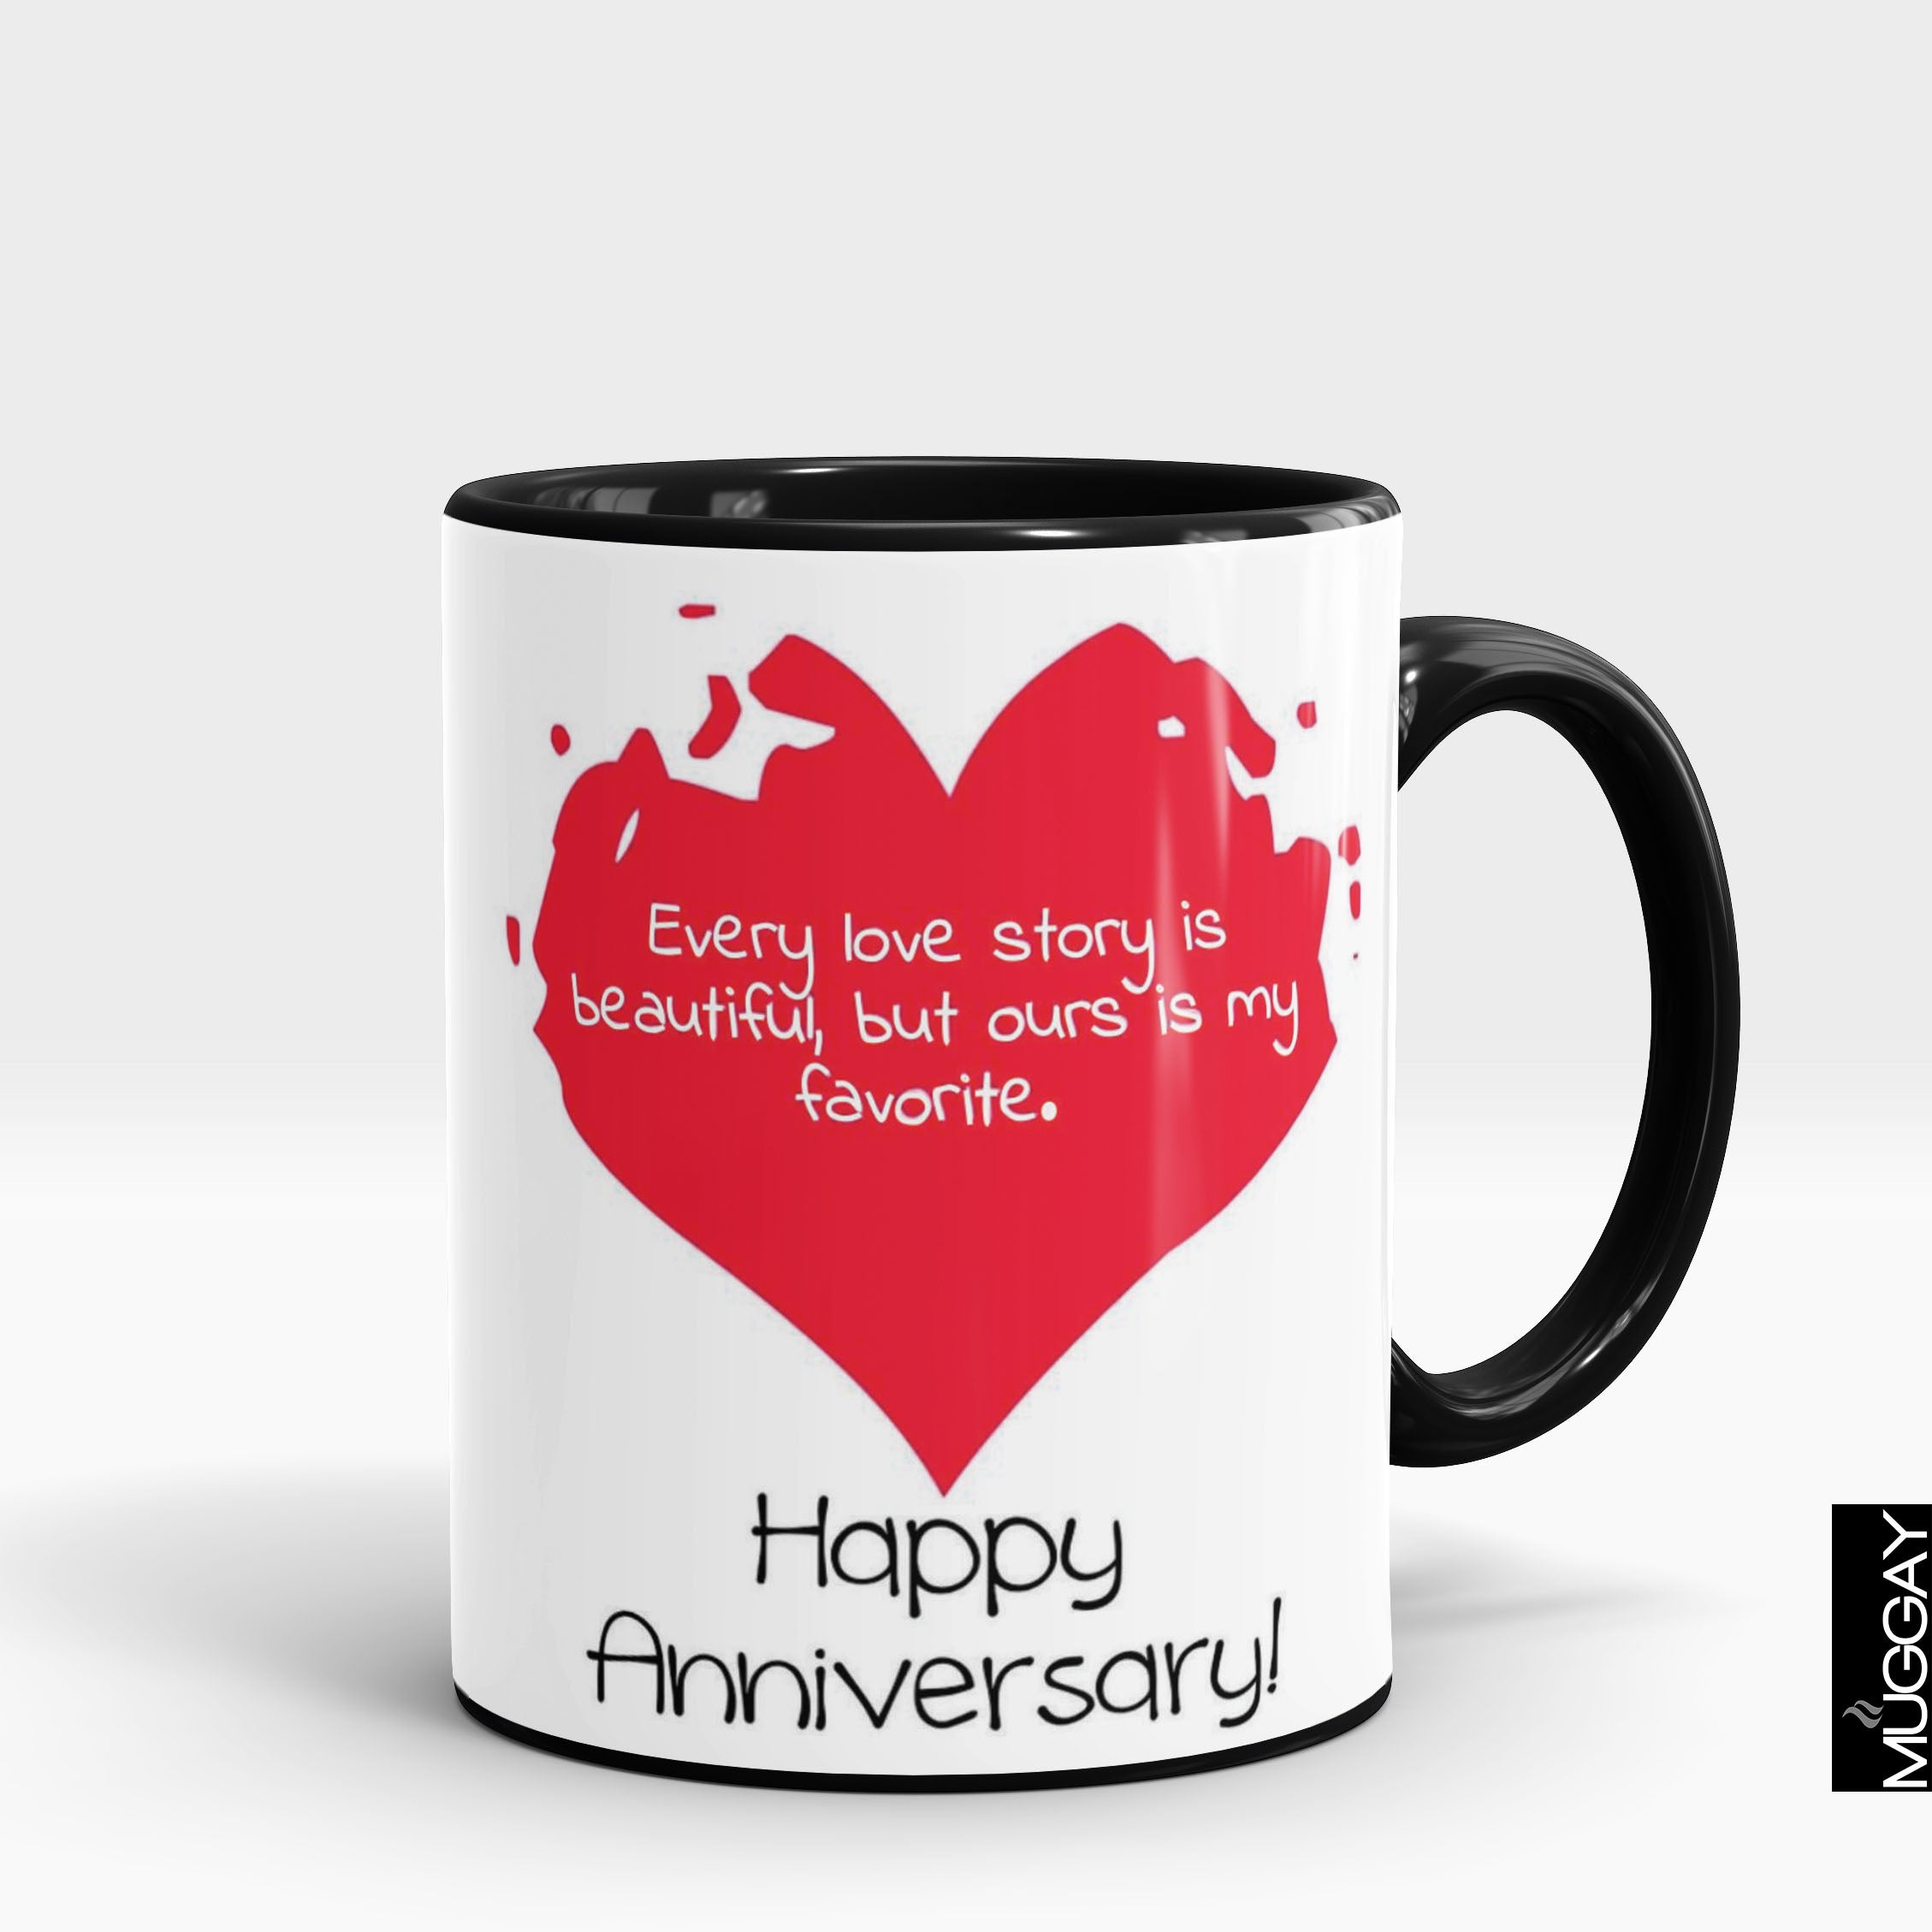 Anniversary Mug - 5 - Muggay.com - Mugs - Printing shop - truck Art mugs - Mug printing - Customized printing - Digital printing - Muggay 